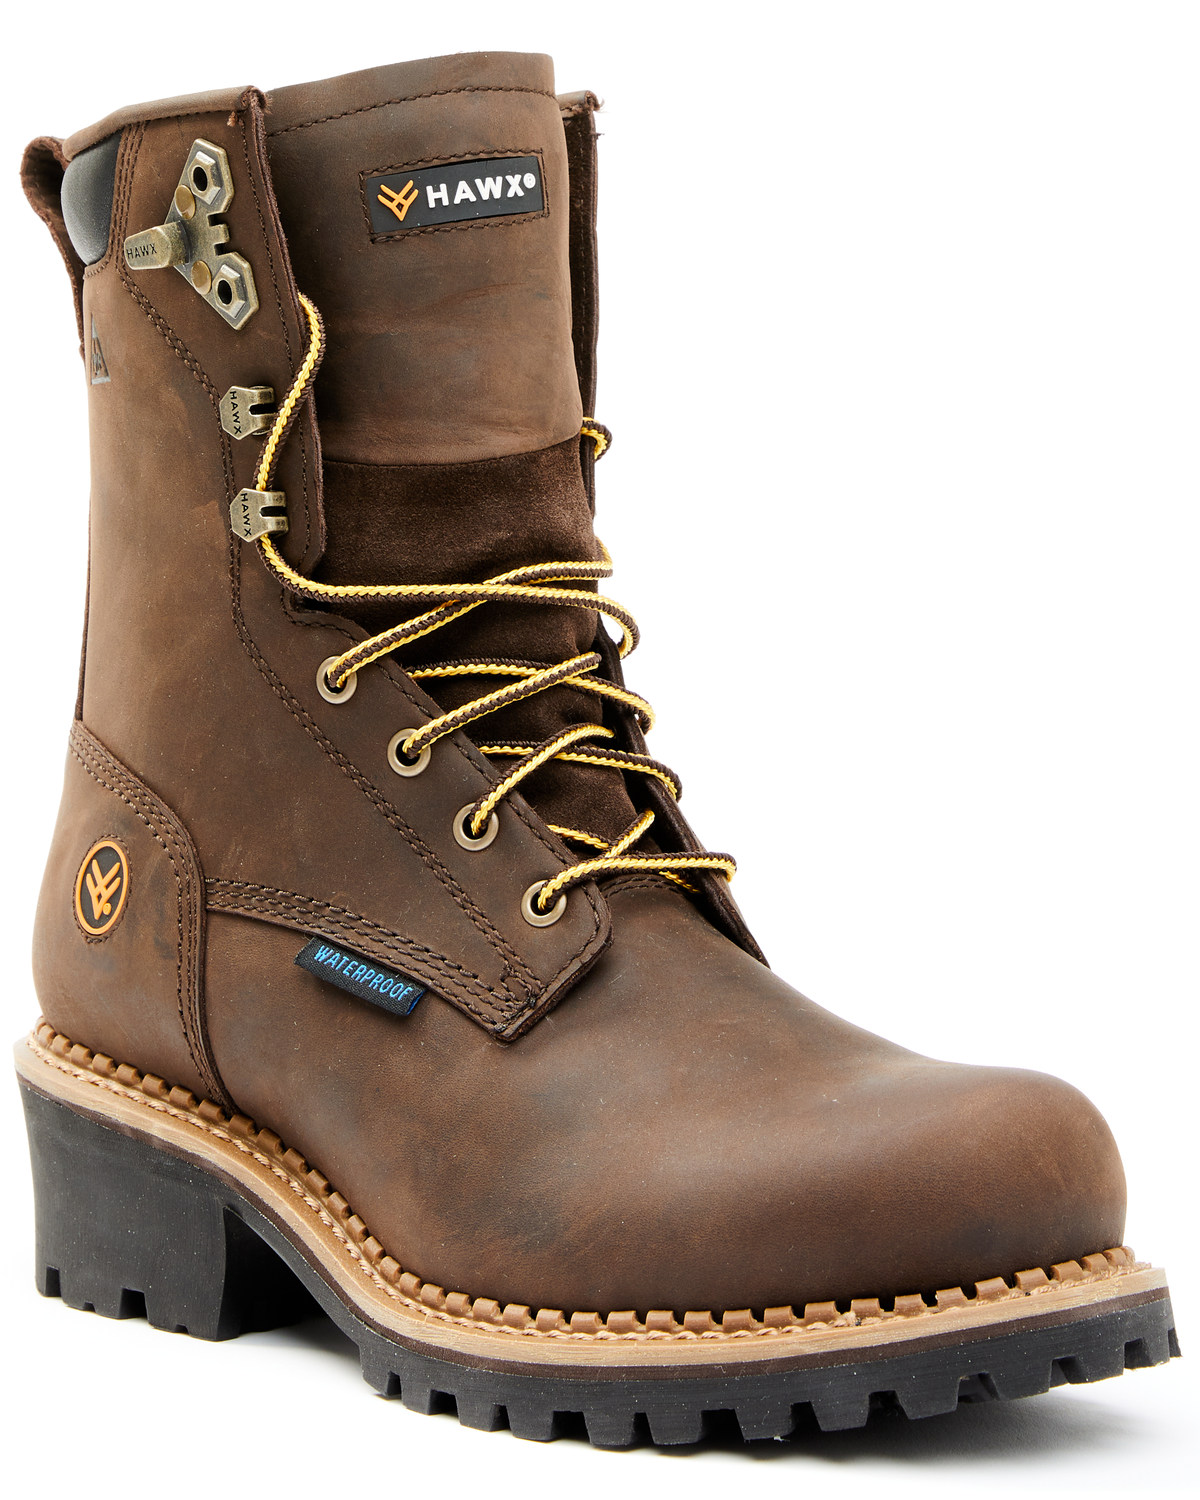 Hawx Men's 8" Waterproof Logger Boots - Soft Toe